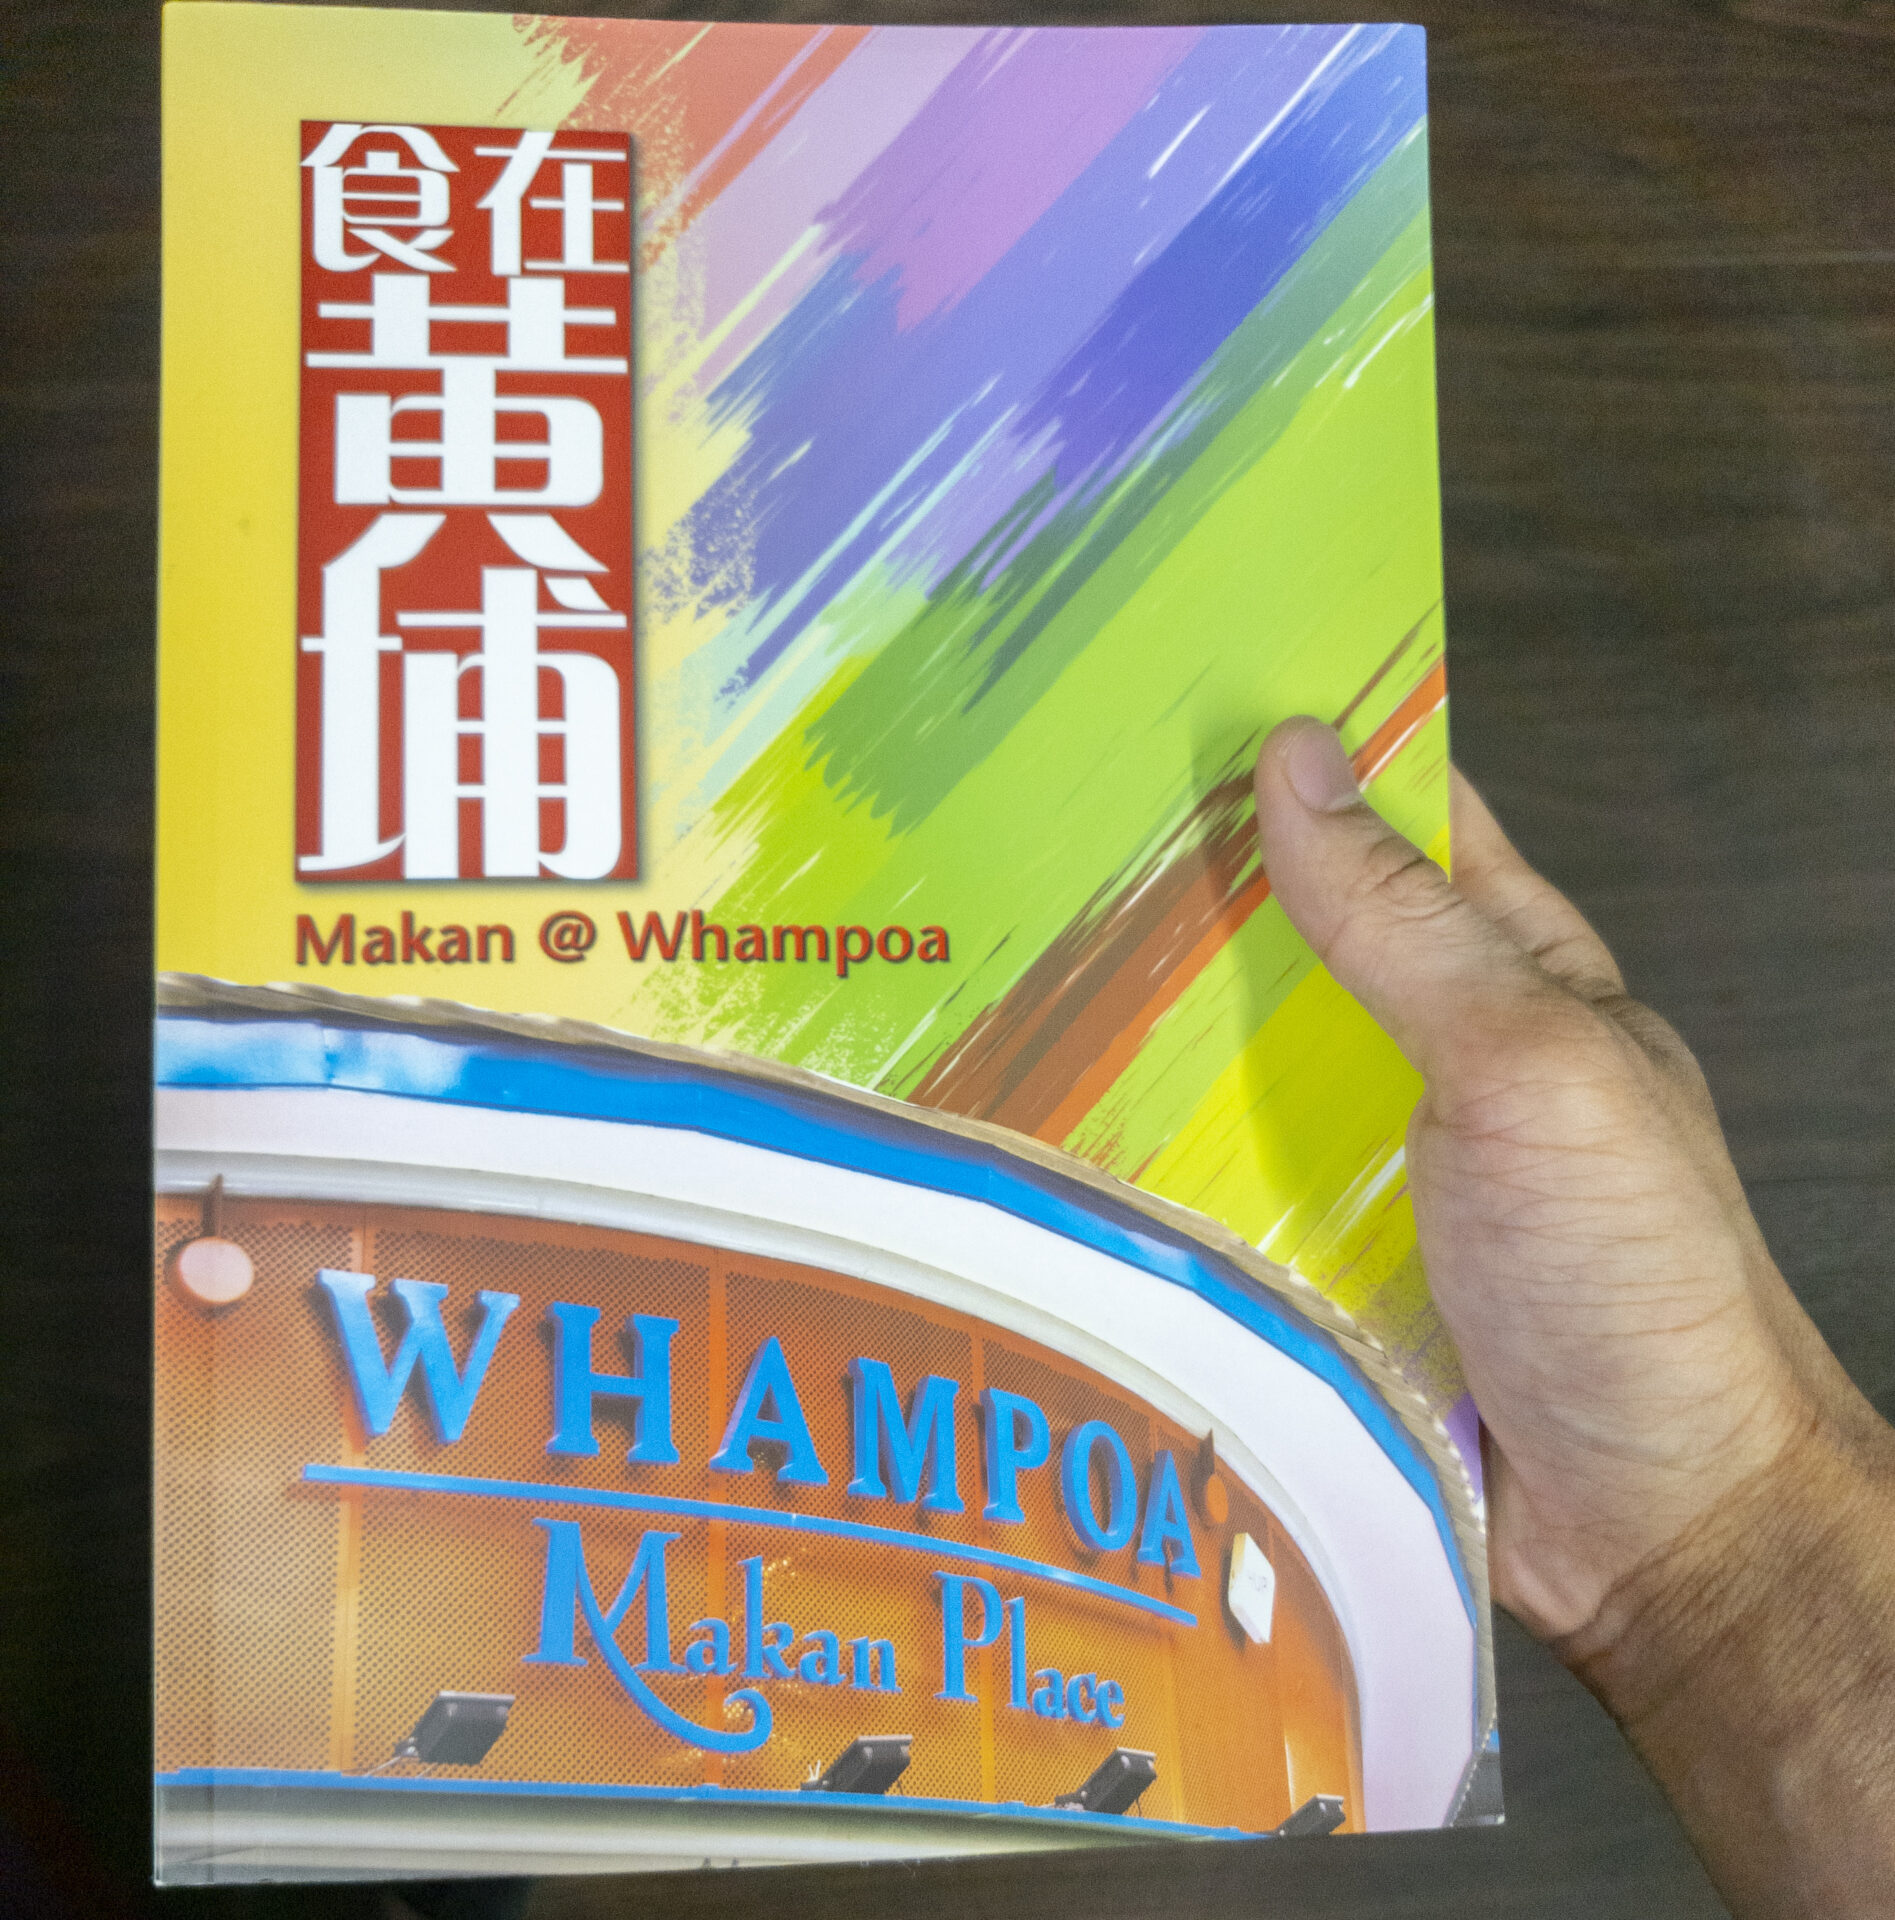 Kim Huat Teochew Beef Noodles - Makan @ Whampoa book